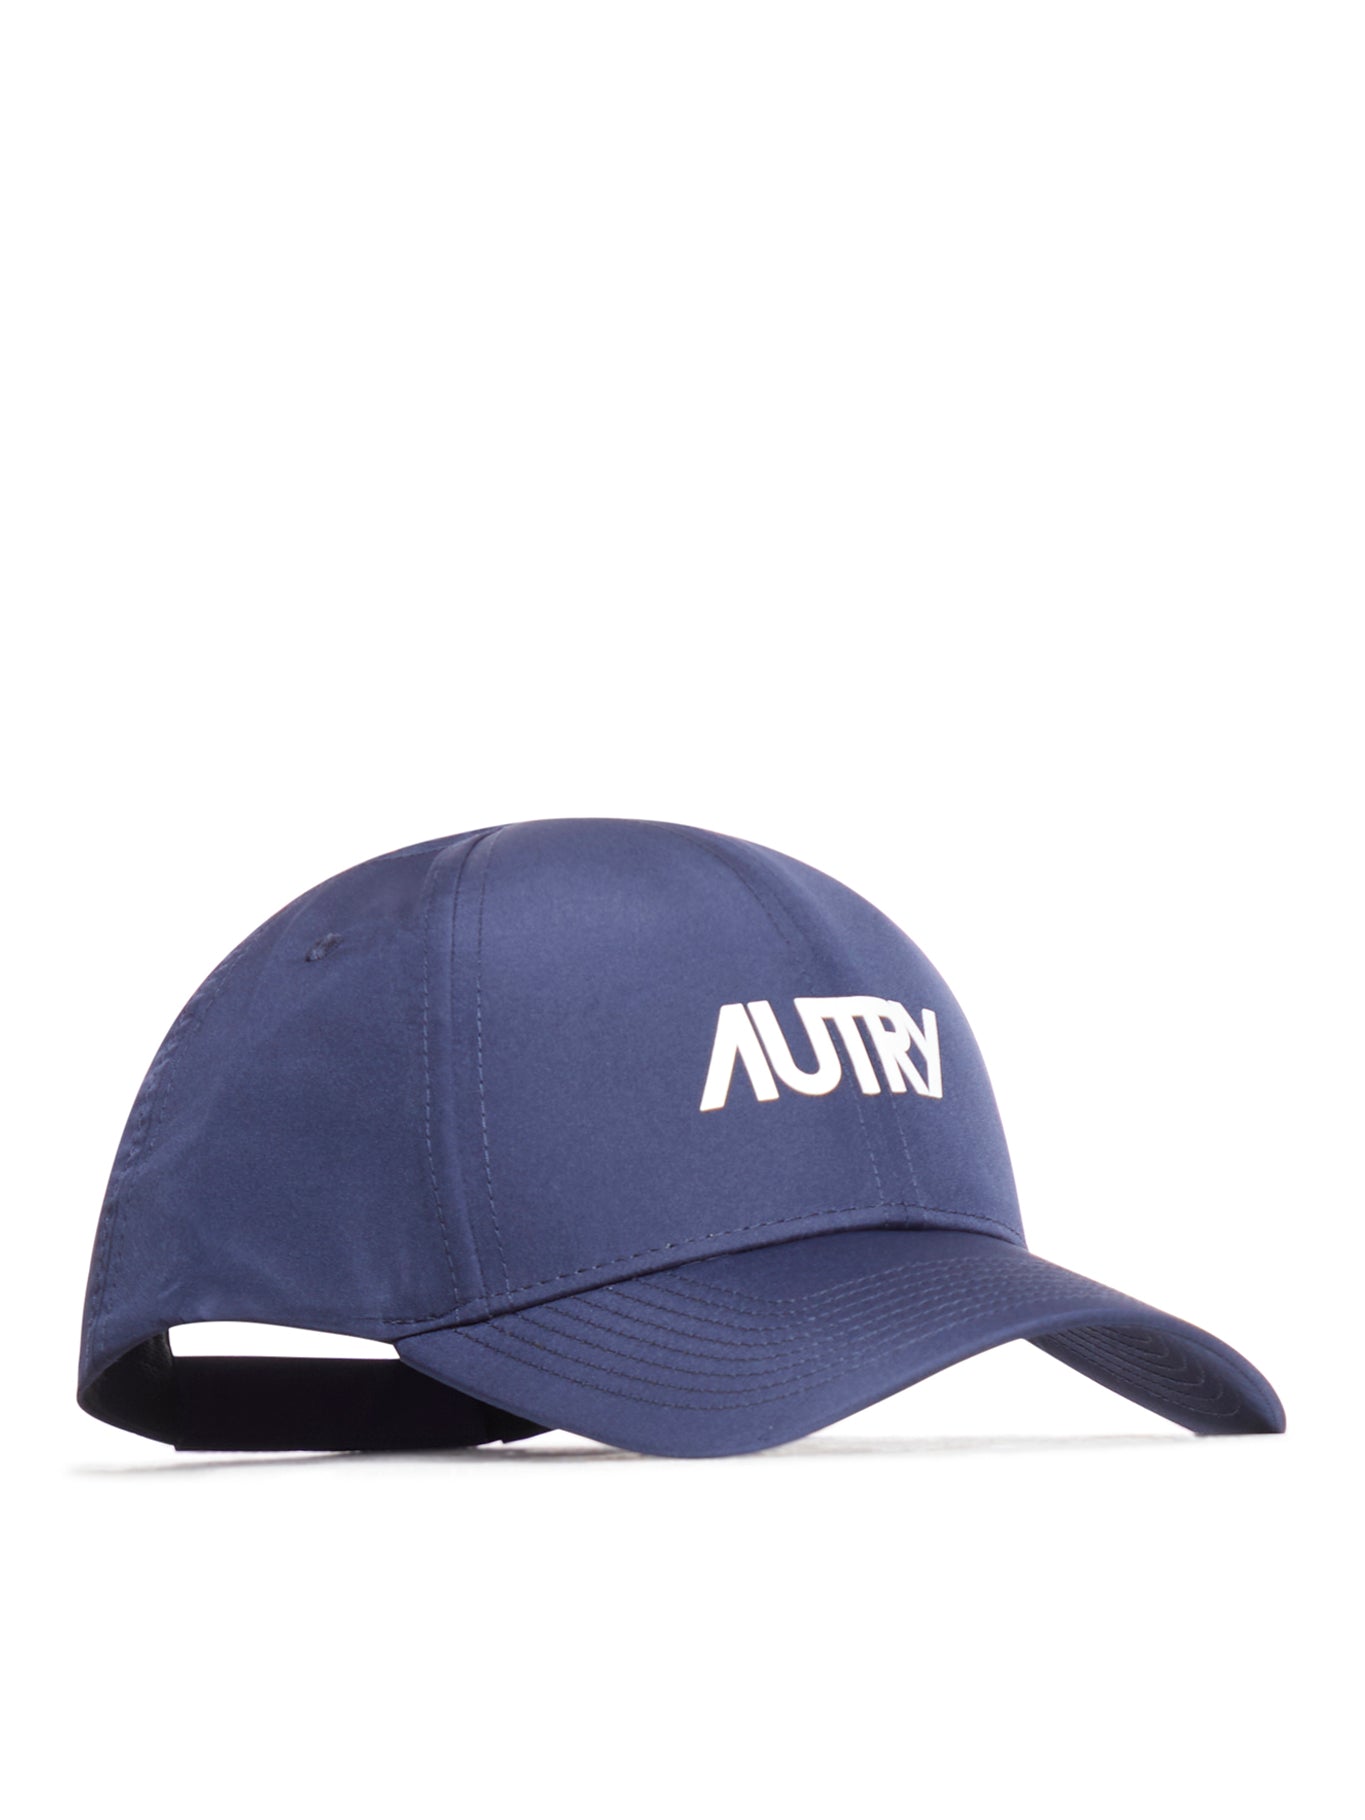 Baseball hat with logo